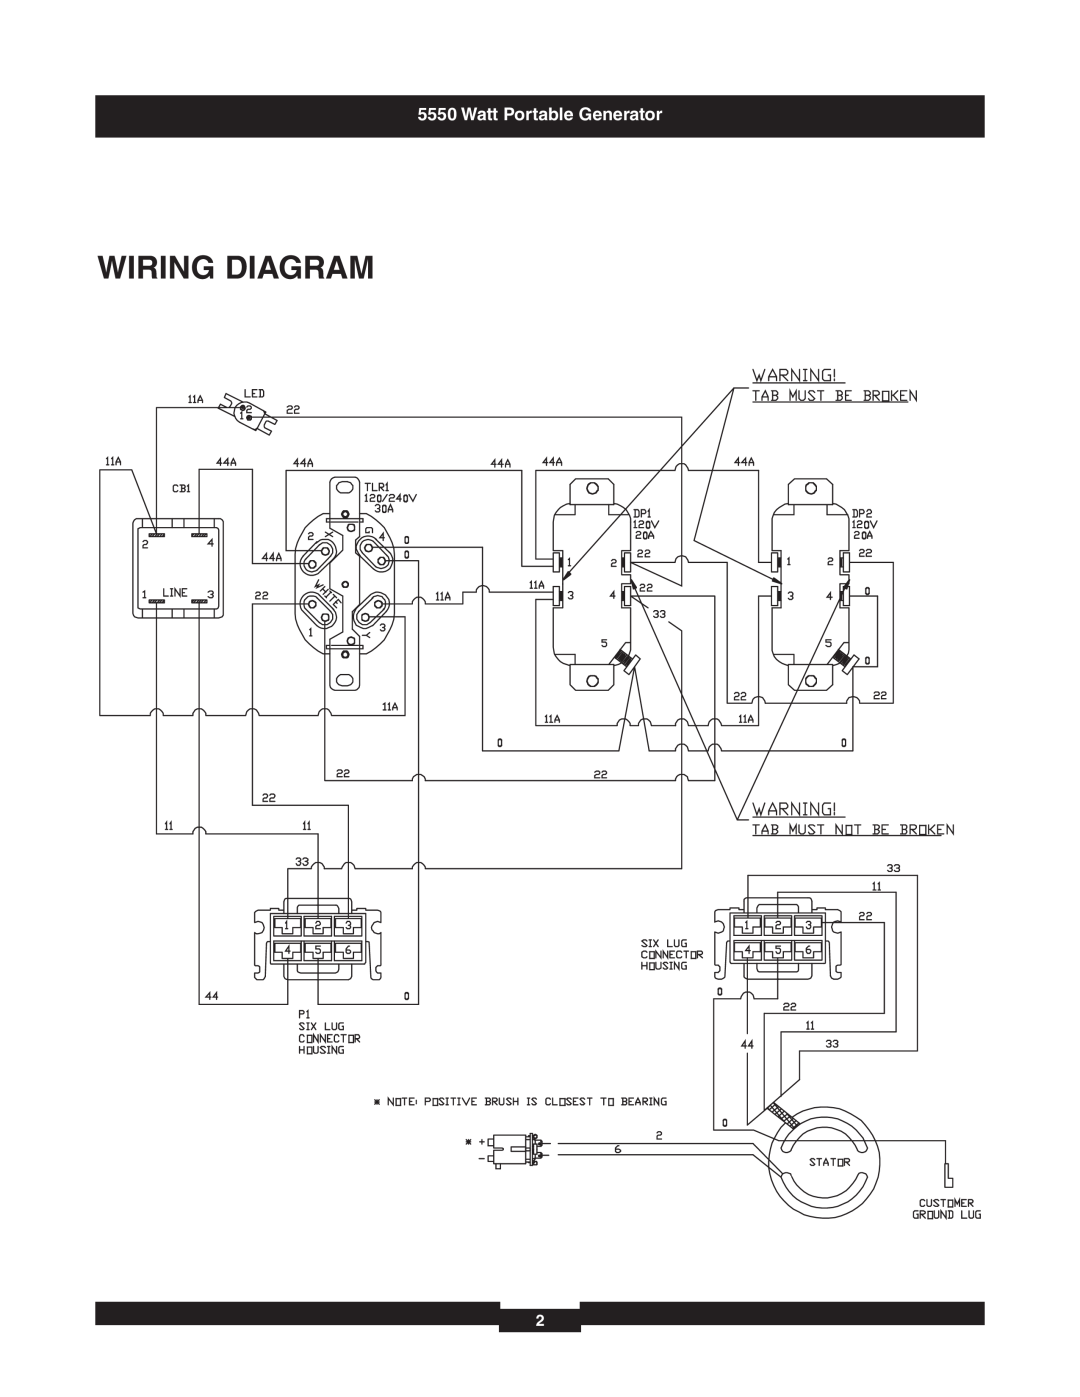 Briggs & Stratton 030325 manual Wiring Diagram, Watt Portable Generator 